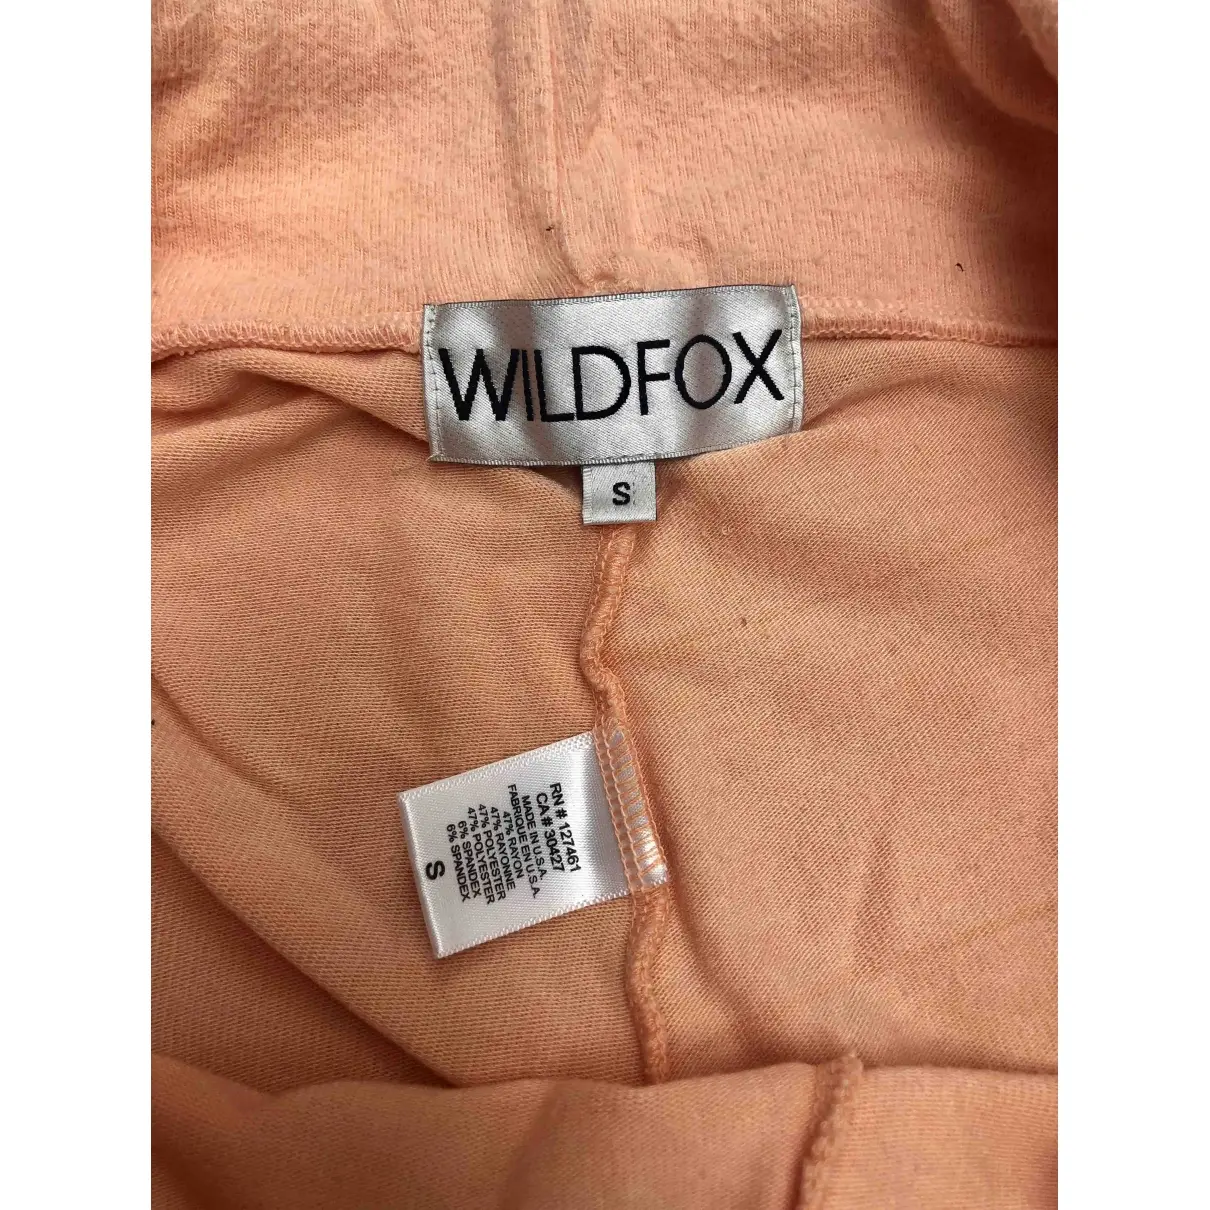 Buy Wildfox Straight pants online